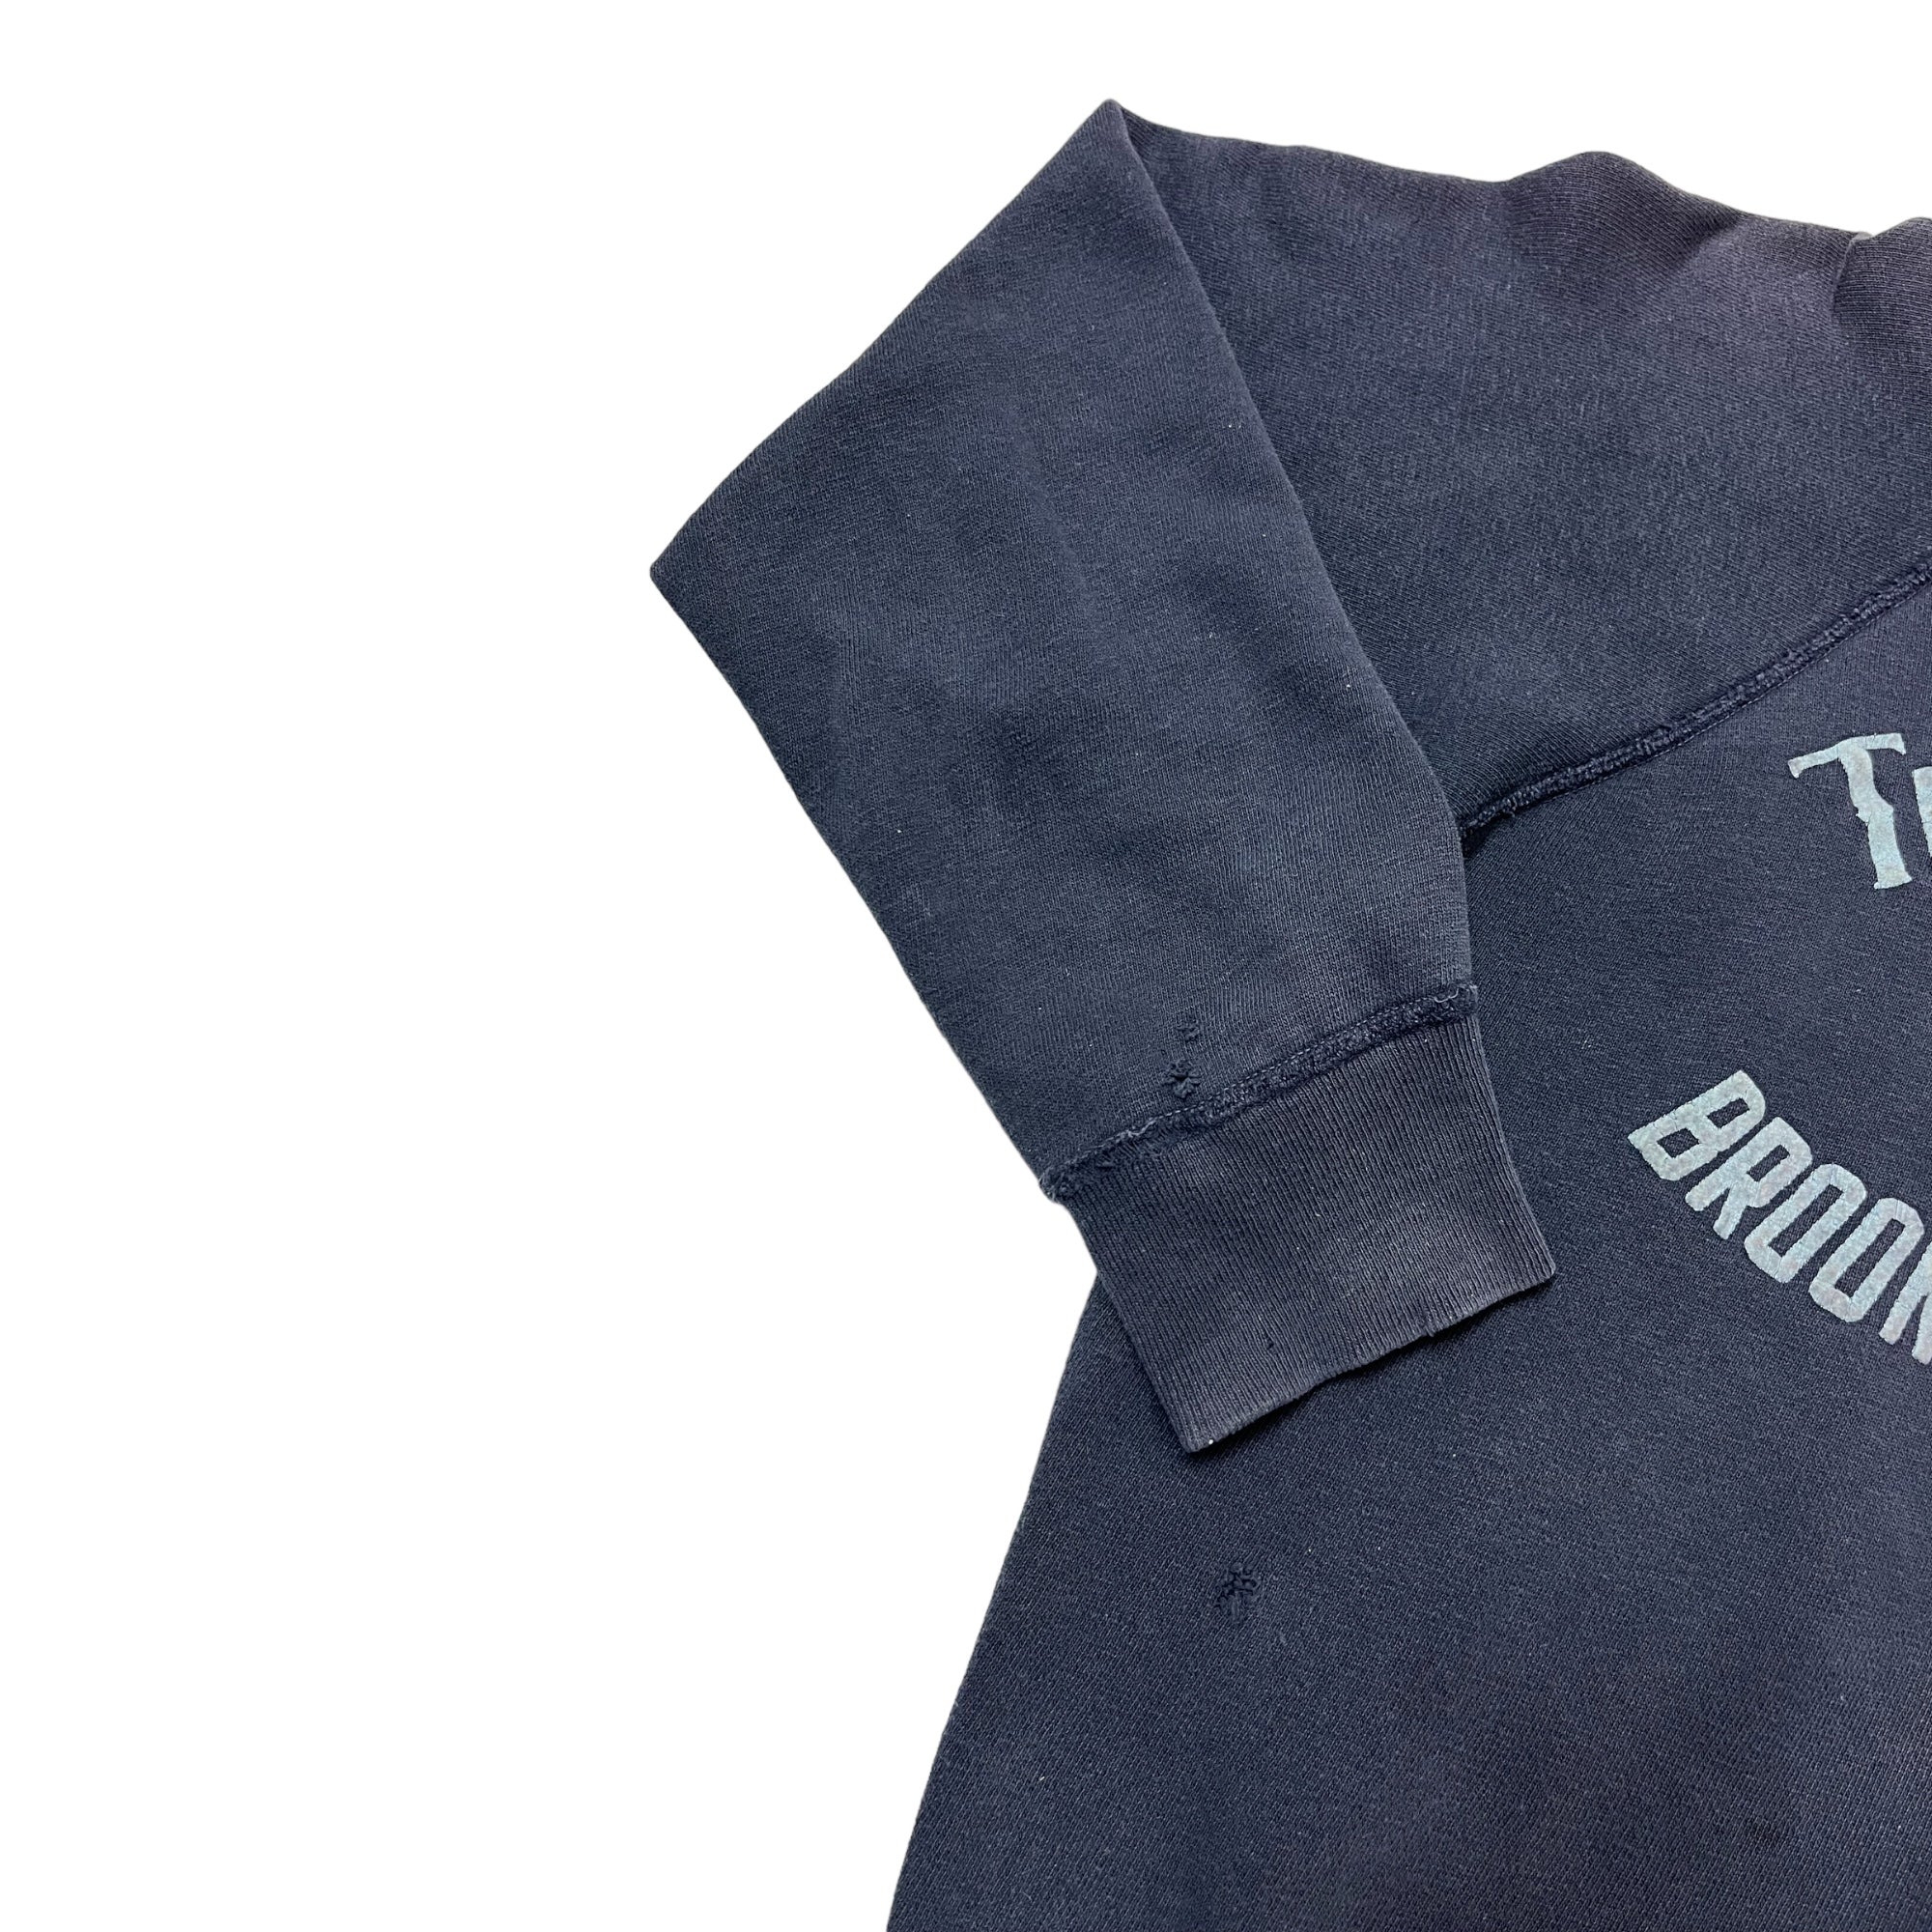 1950s/60s Brooklyn College ‘Tracy House’ Flock Print Crewneck Sweatshirt - Faded Navy - M